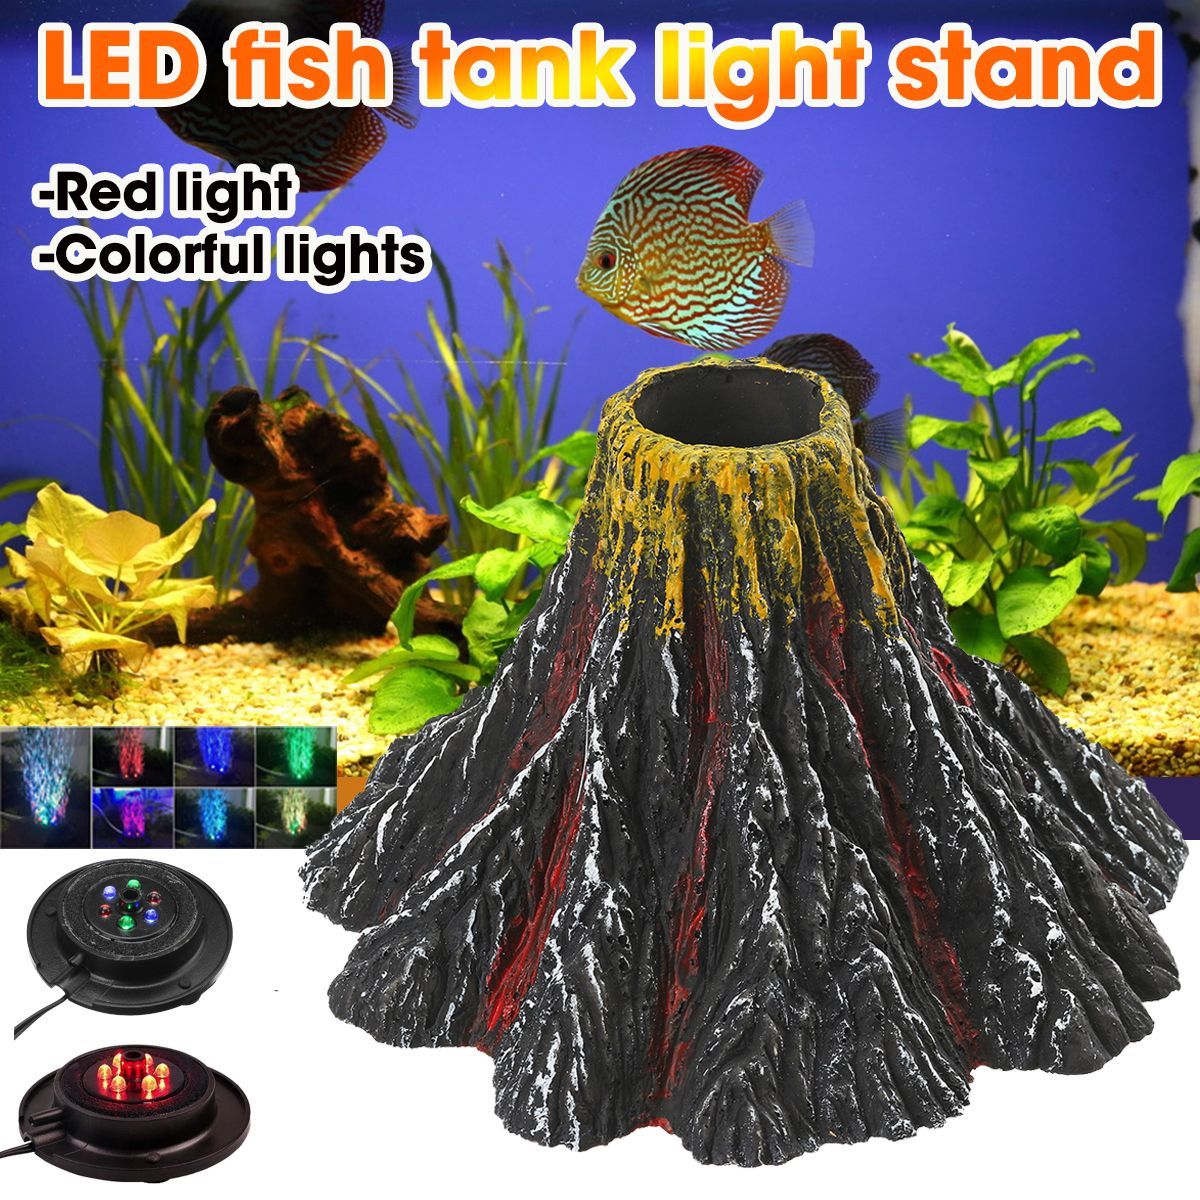 Red-lightColorful-Lights-LED-Fish-Tank-Light-Stand-Water-Grass-Light-Aquarium-1606265